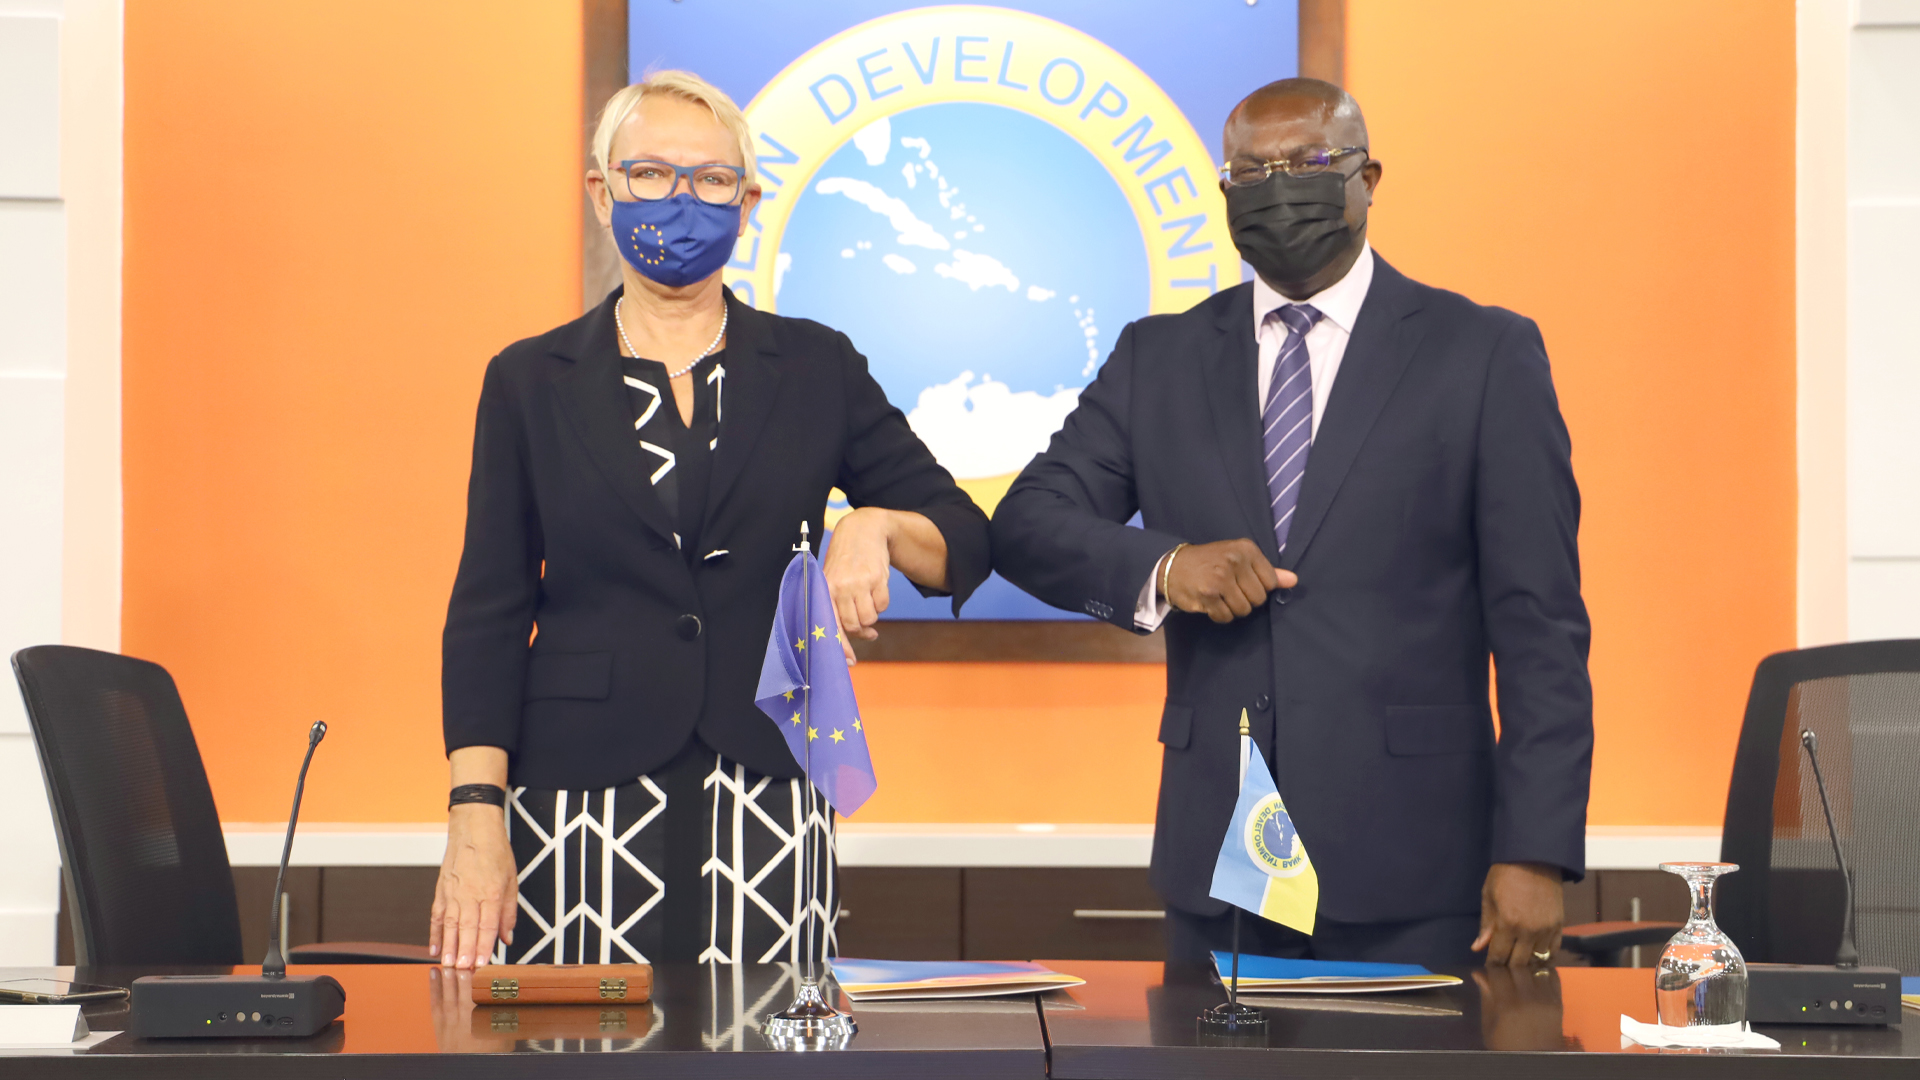 EU Ambassador Malgorzata Wasilewska and CDB Vice-President Isaac Solomon bump elbows